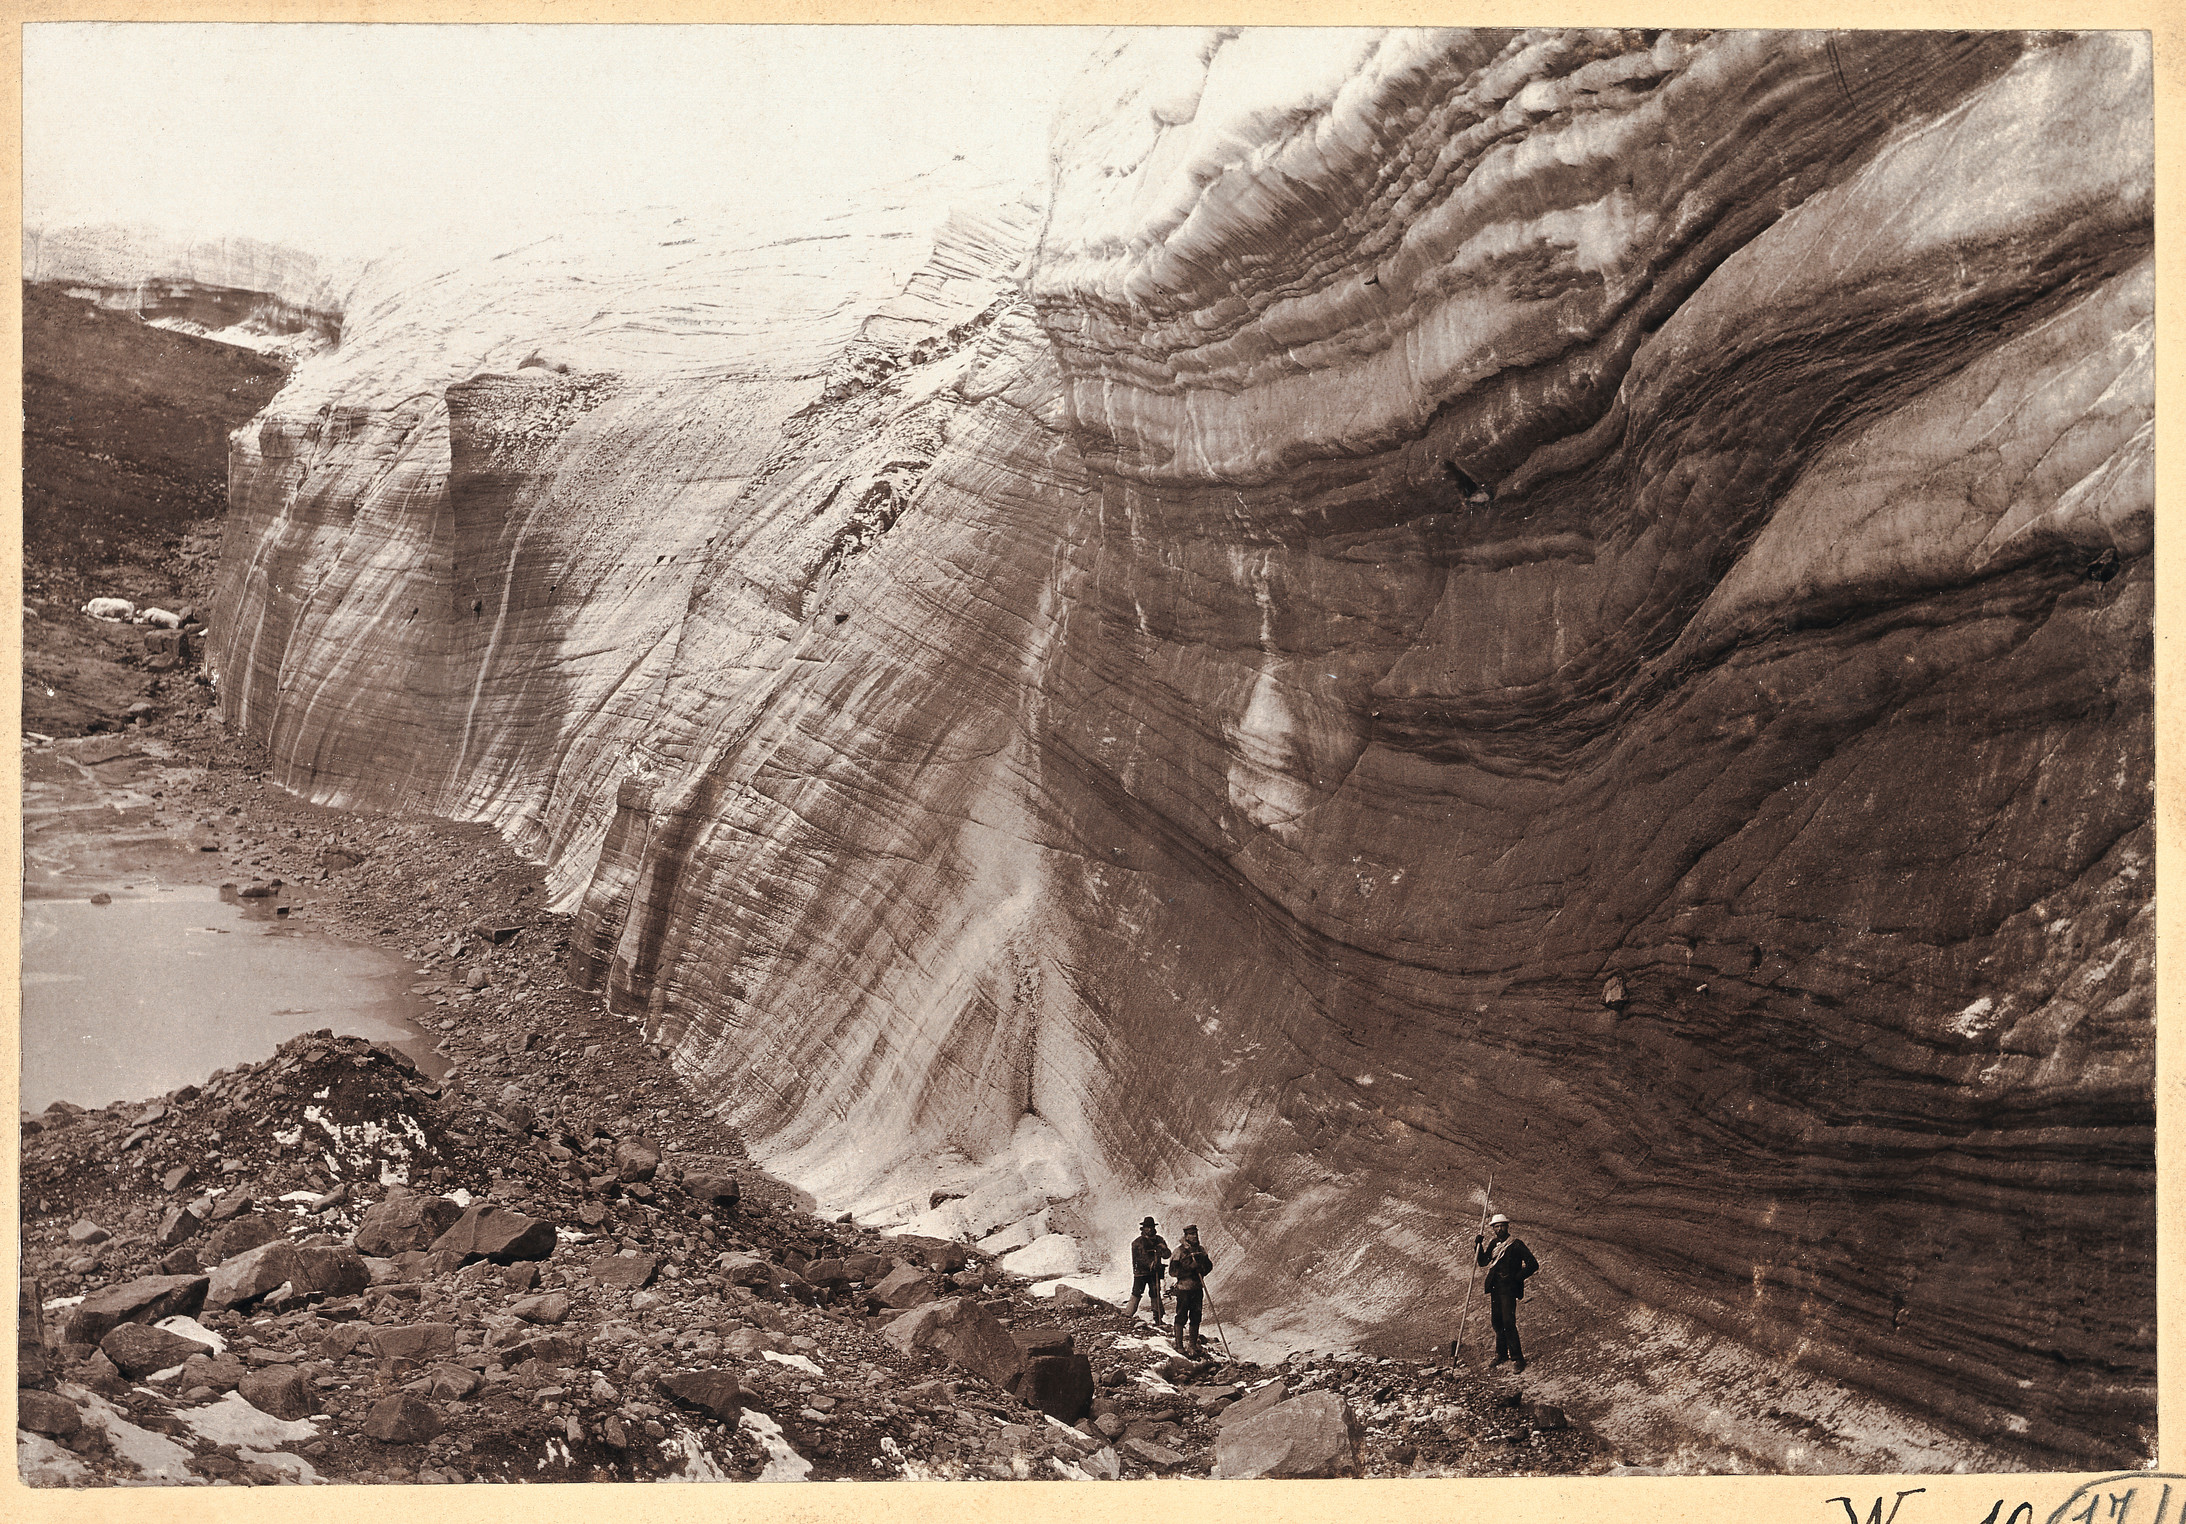 William Libbey, Tugo Gletscher. Grönland,1894/95